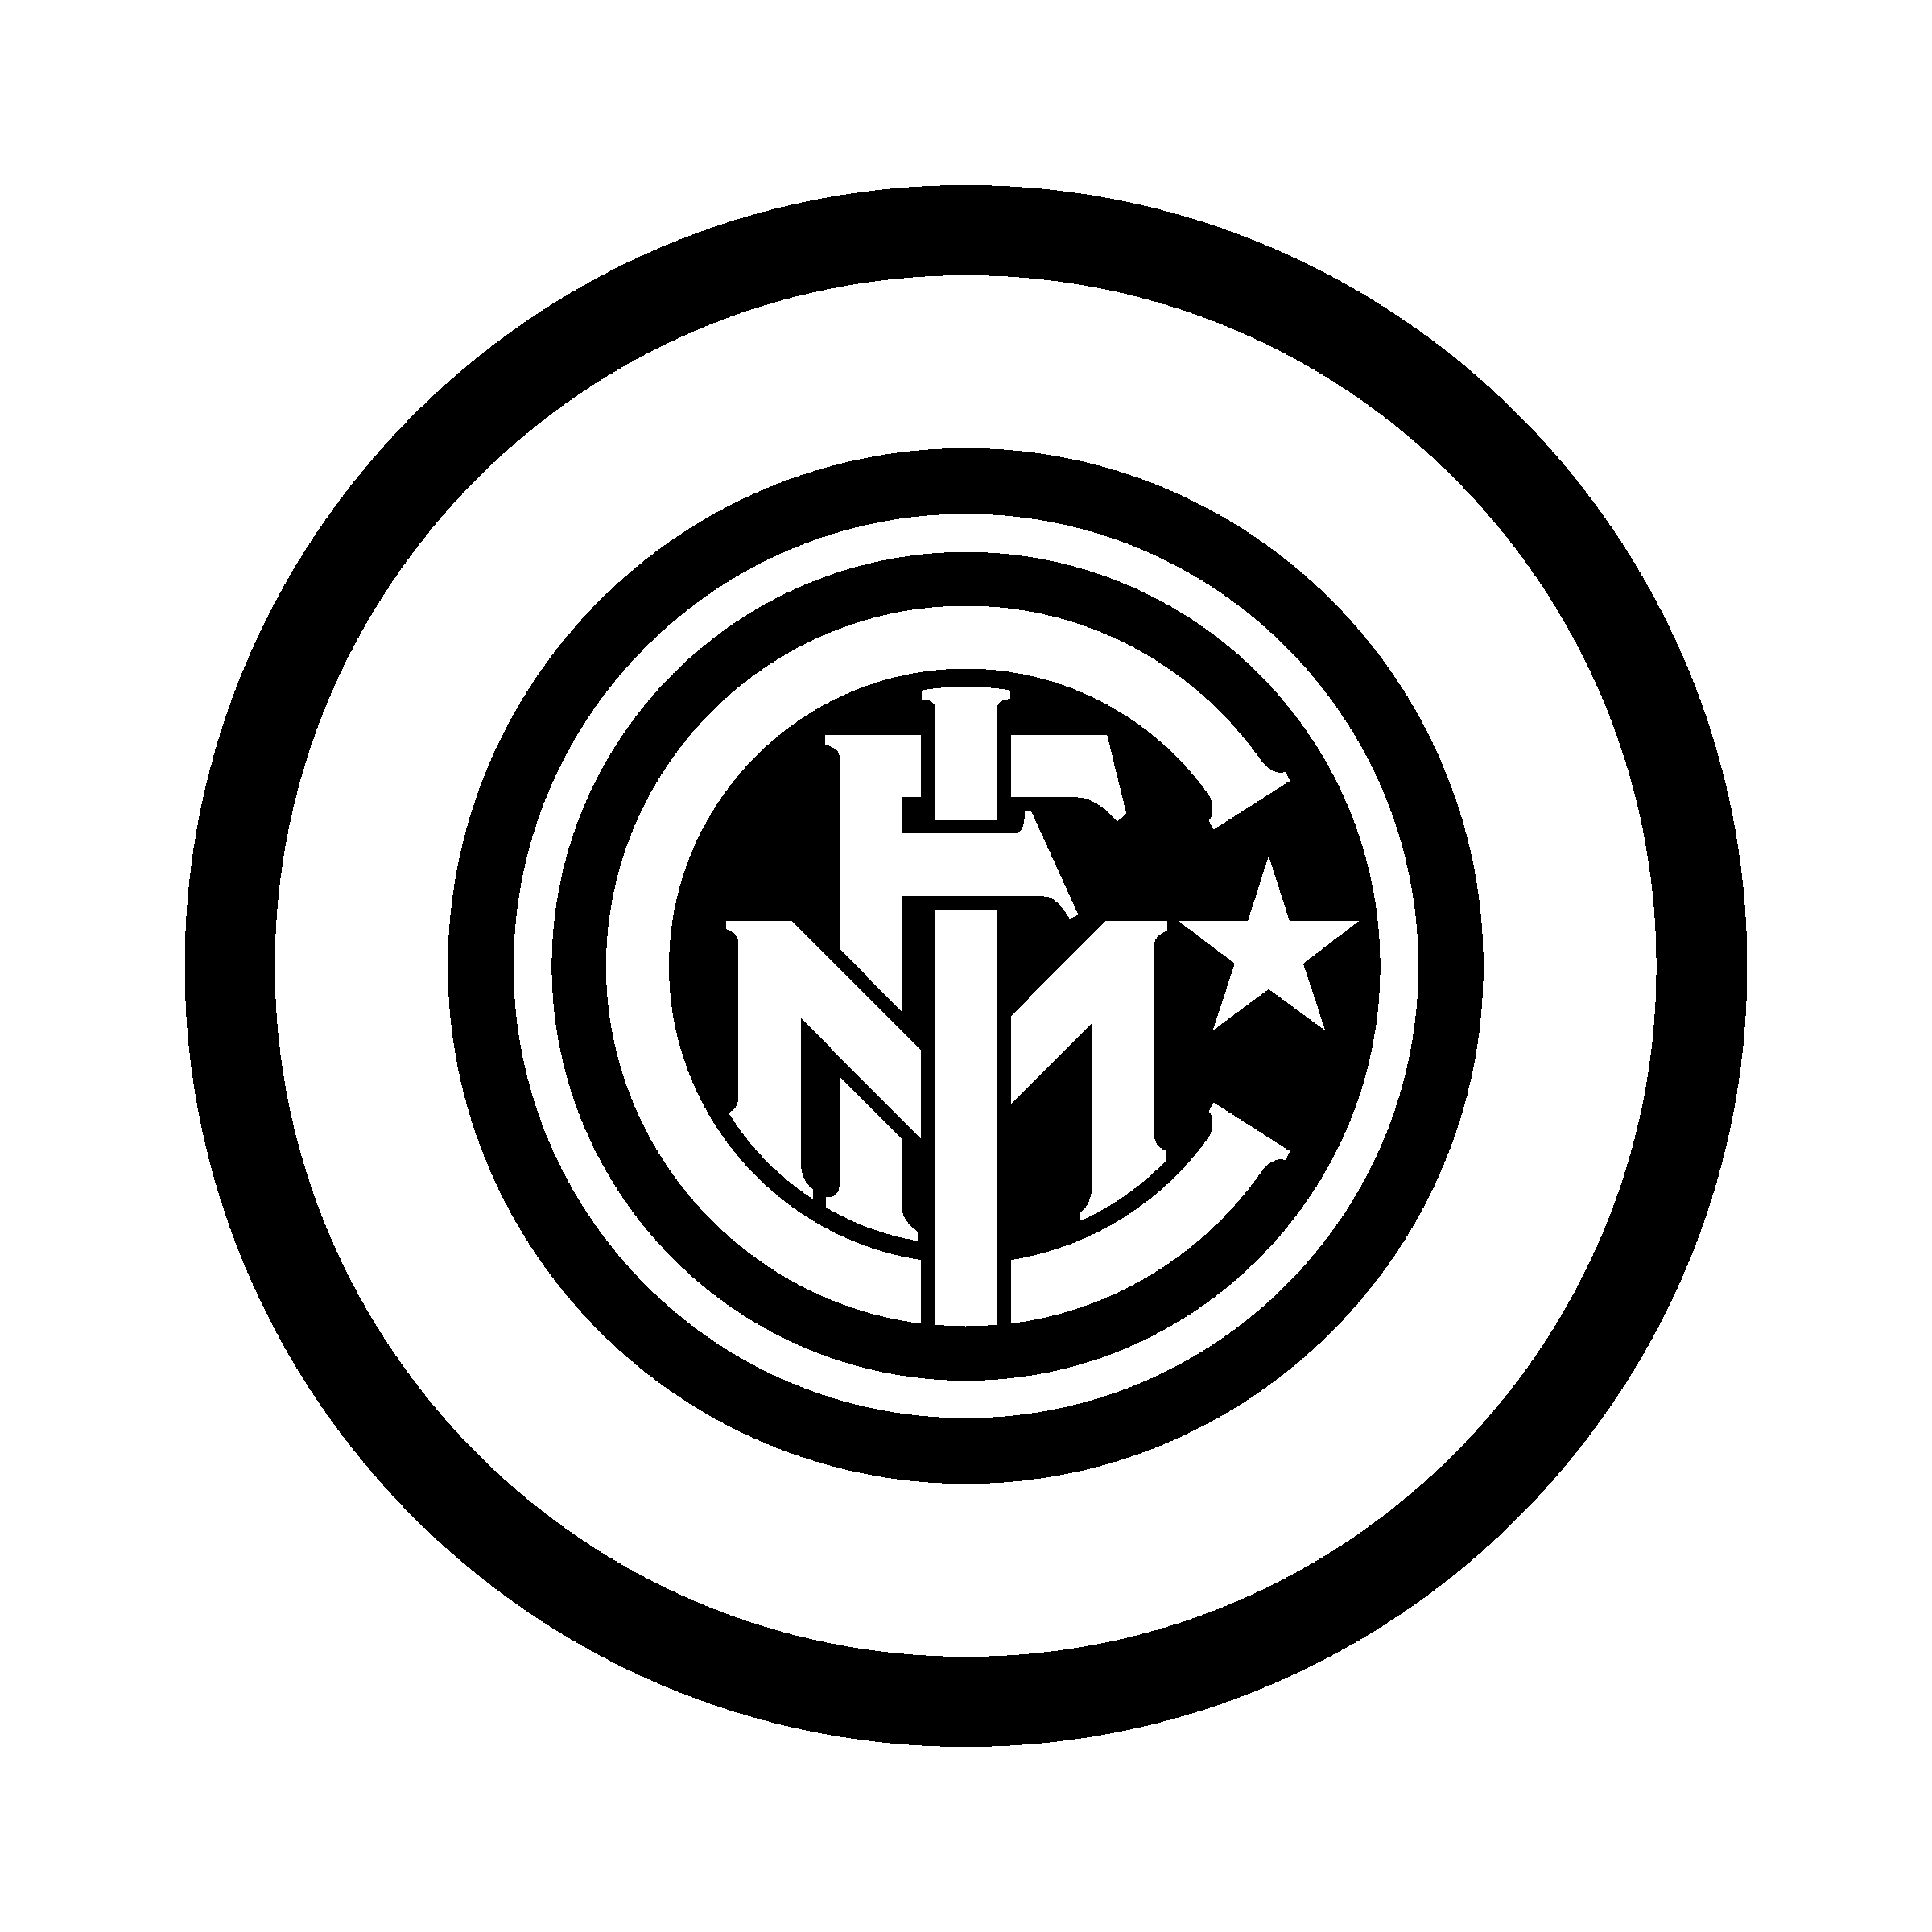 Inter Logo - Inter FC Logo PNG Transparent & SVG Vector - Freebie Supply